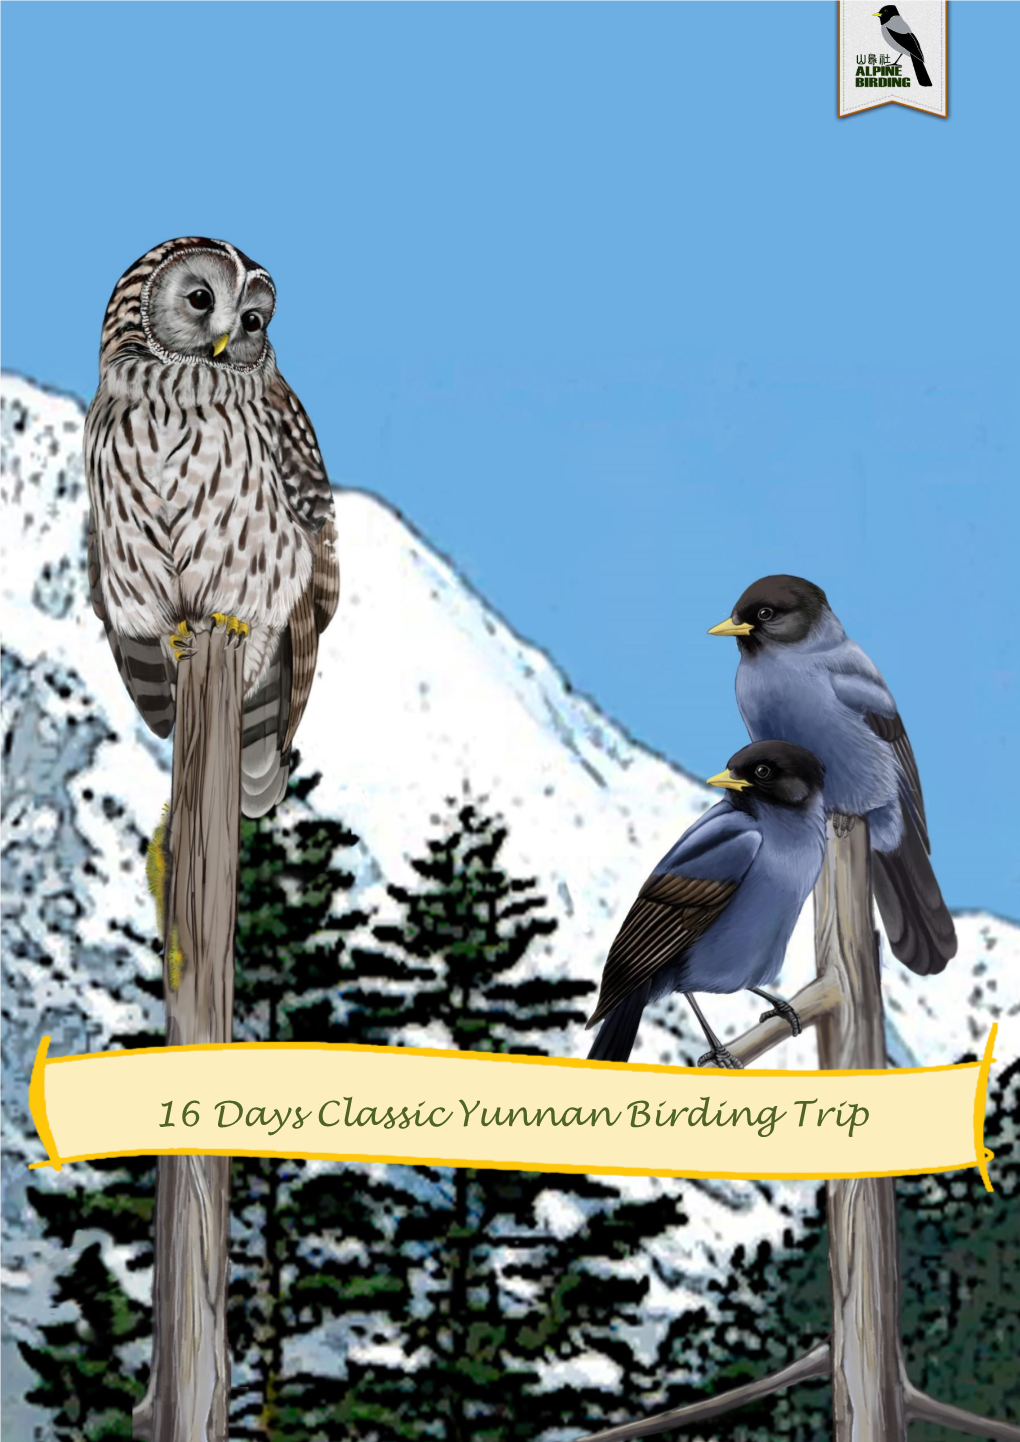 16 Days Classic Yunnan Birding Trip